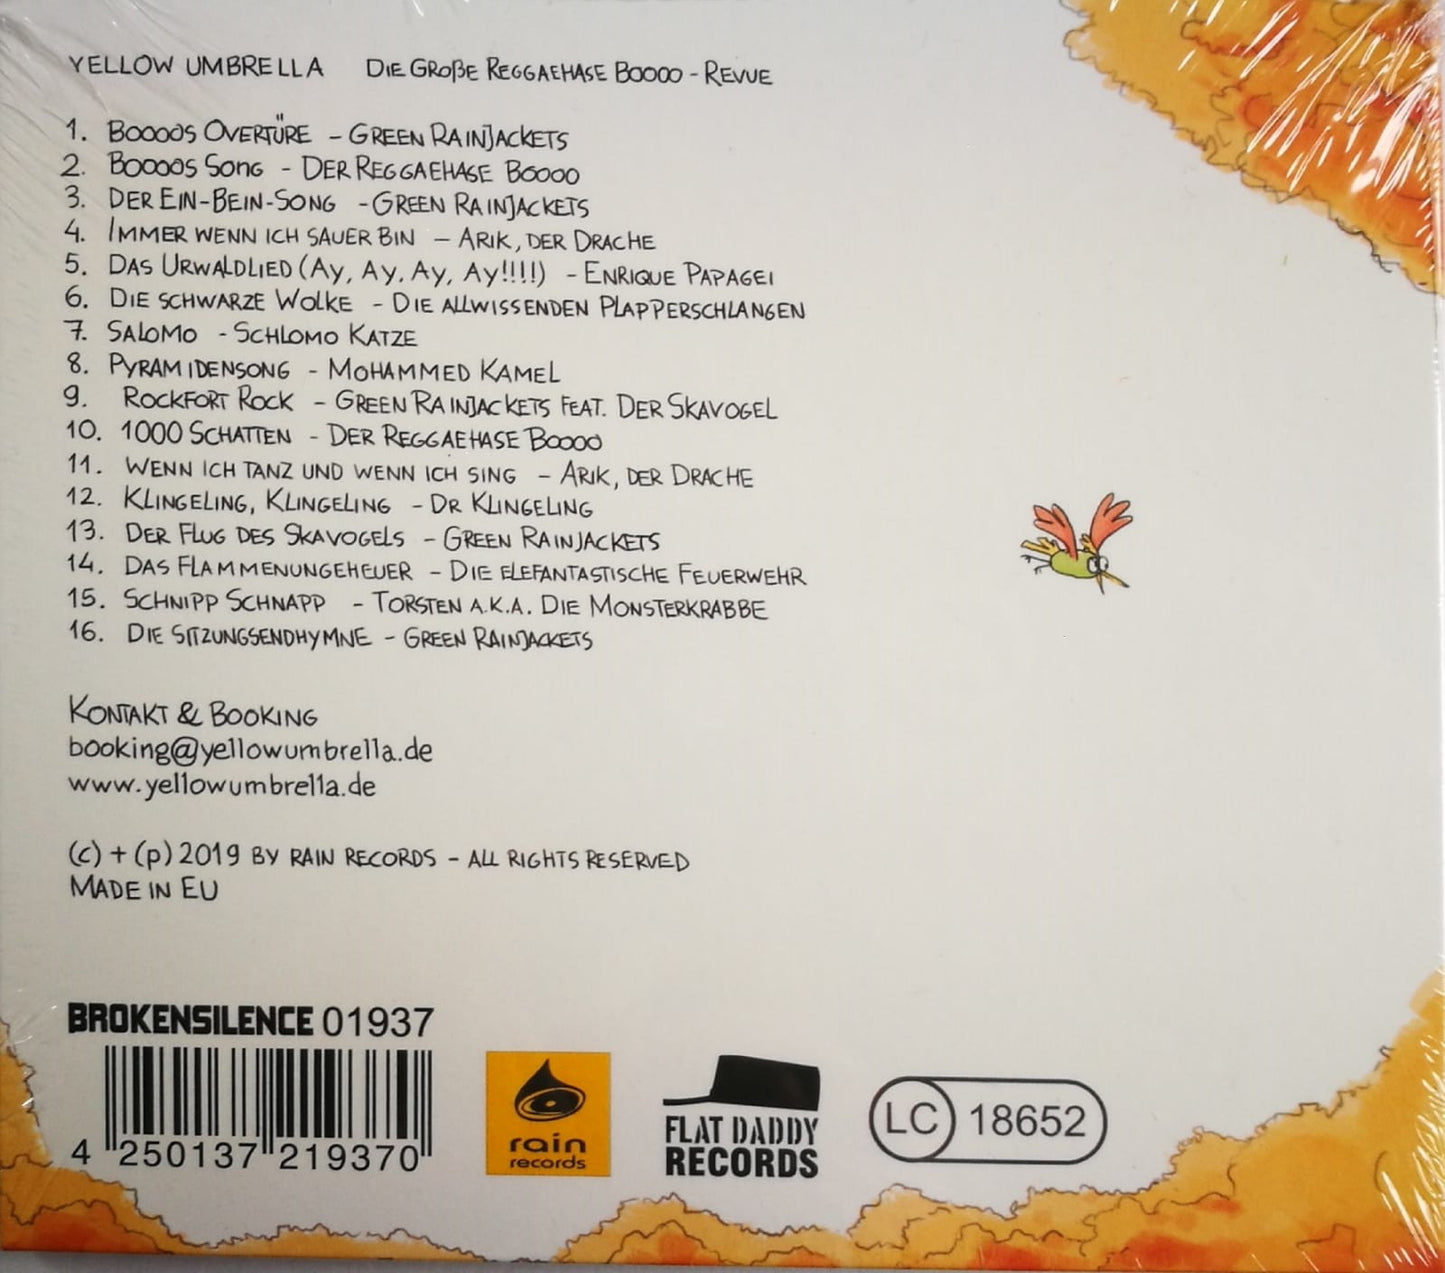 CD - Yellow Umbrella - Die Große Reggaehase Boooo Revue